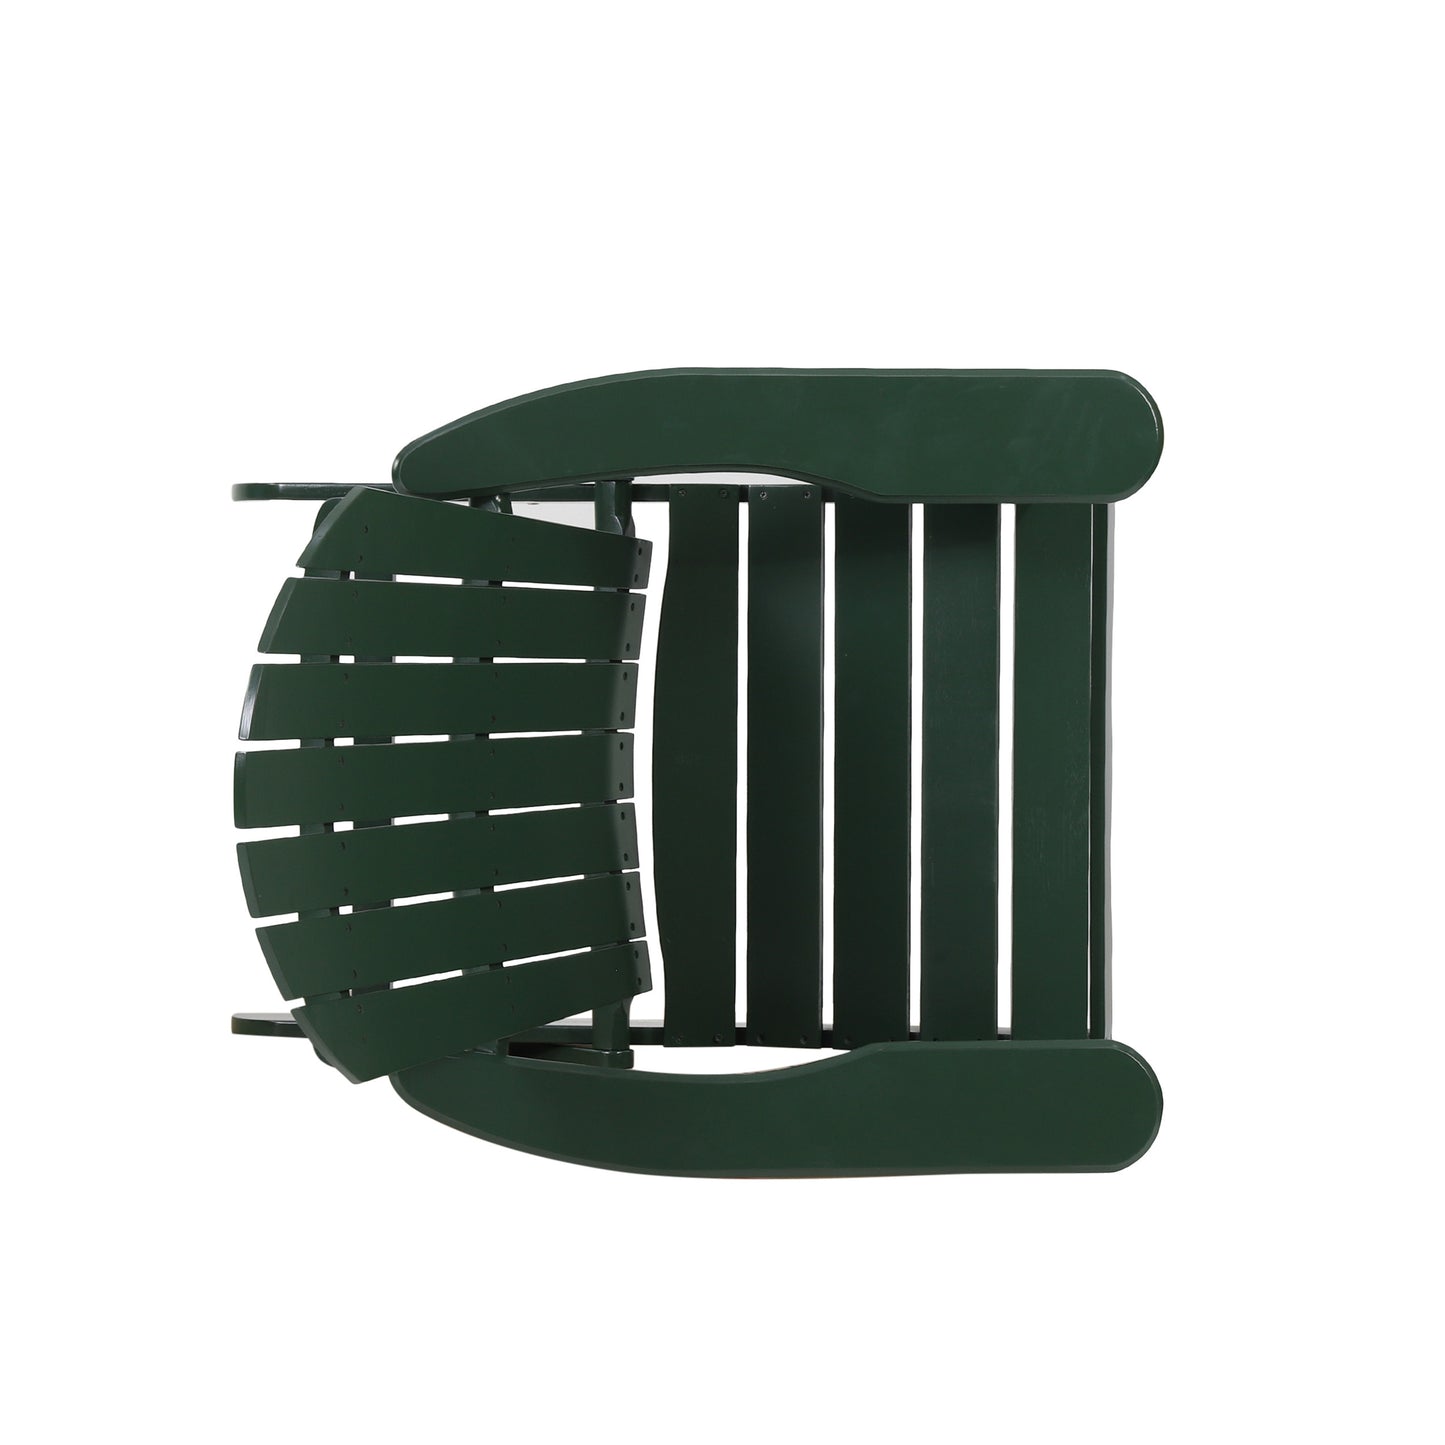 Cartagena Outdoor Rustic Acacia Wood Folding Adirondack Chair, Set of 2